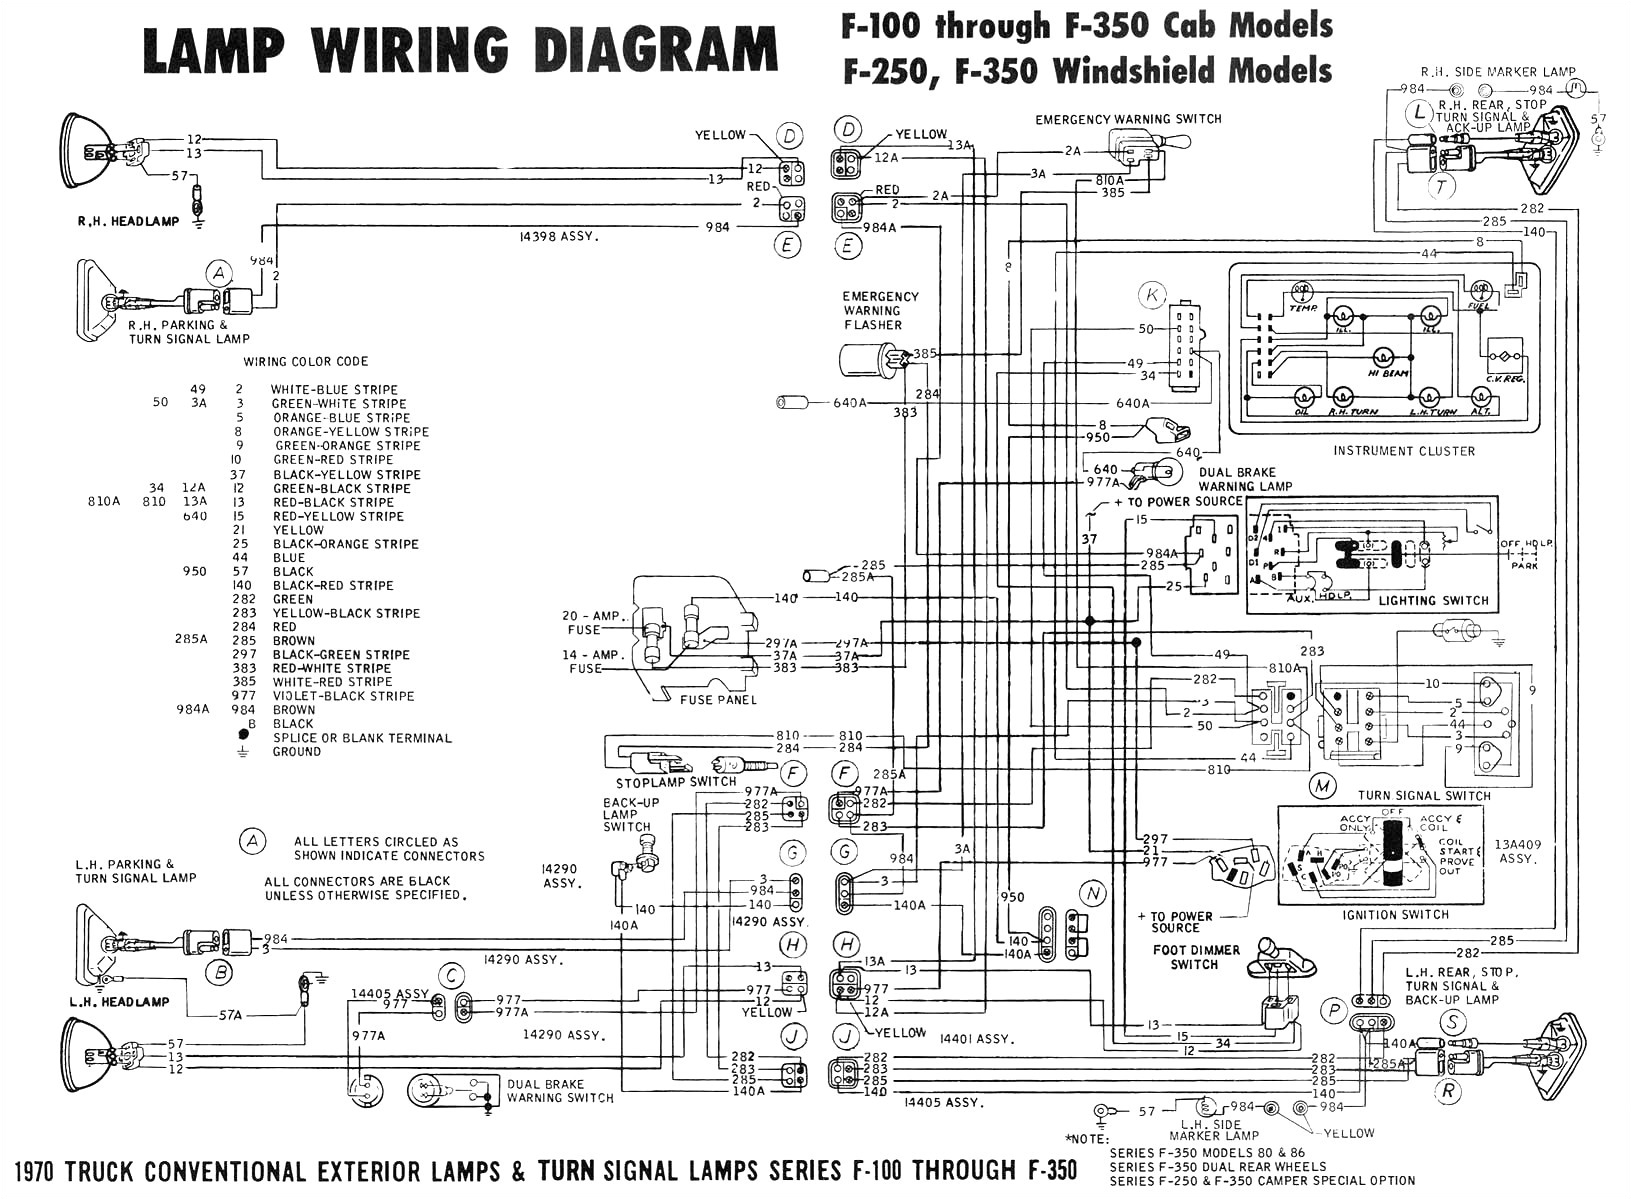 western star radio wiring diagram blog wiring diagram western star radio wiring diagram